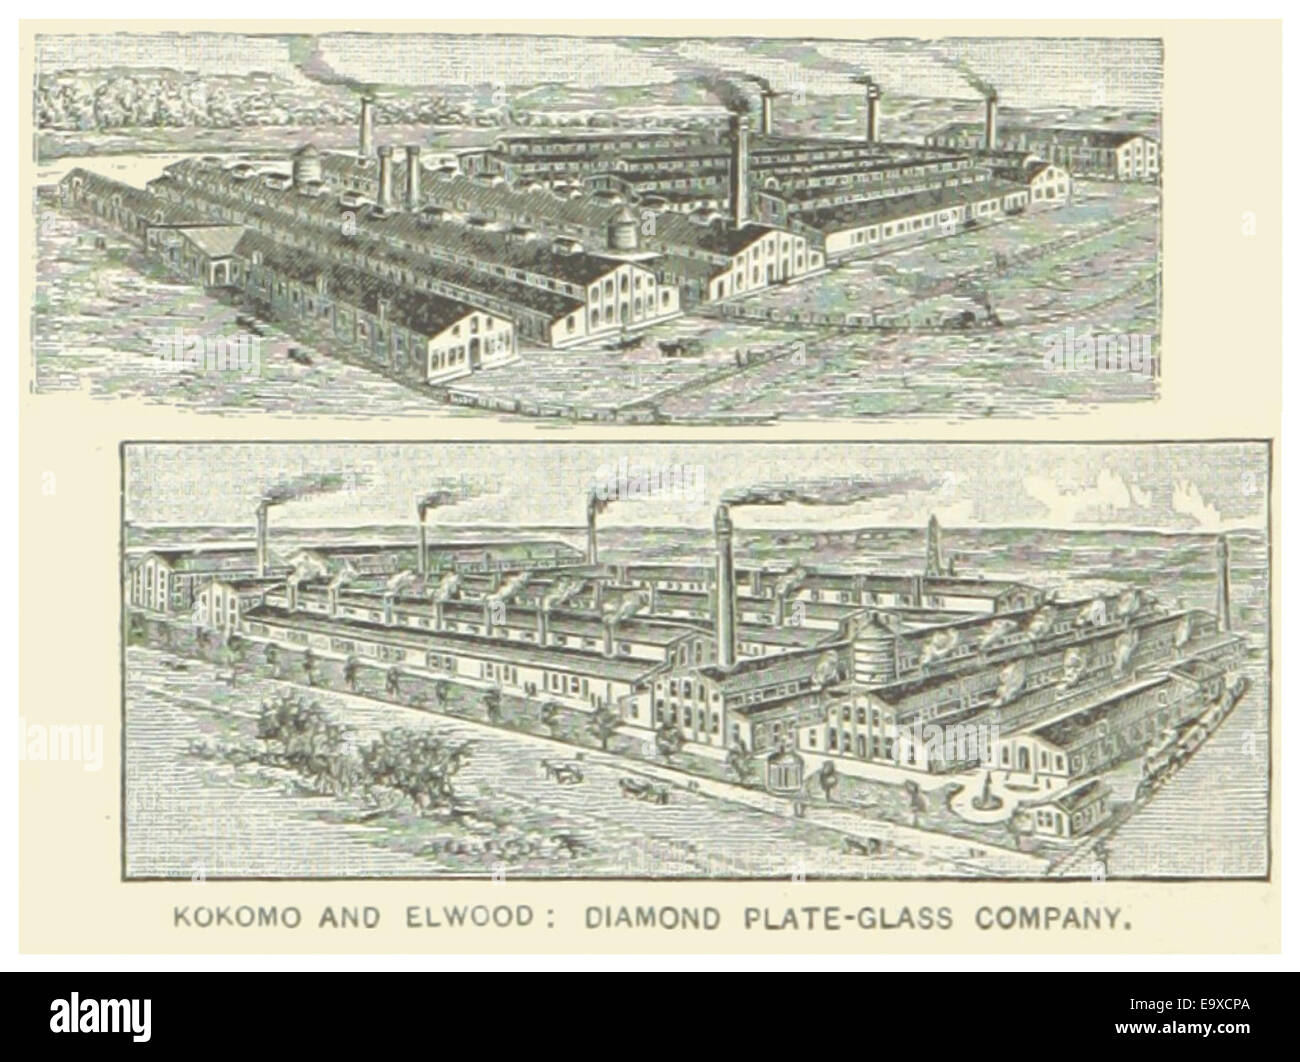 US-IN(1891) p248 KOKOMO AND ELWOOD, DIAMOND PLATE-GLASS COMPANY Stock Photo